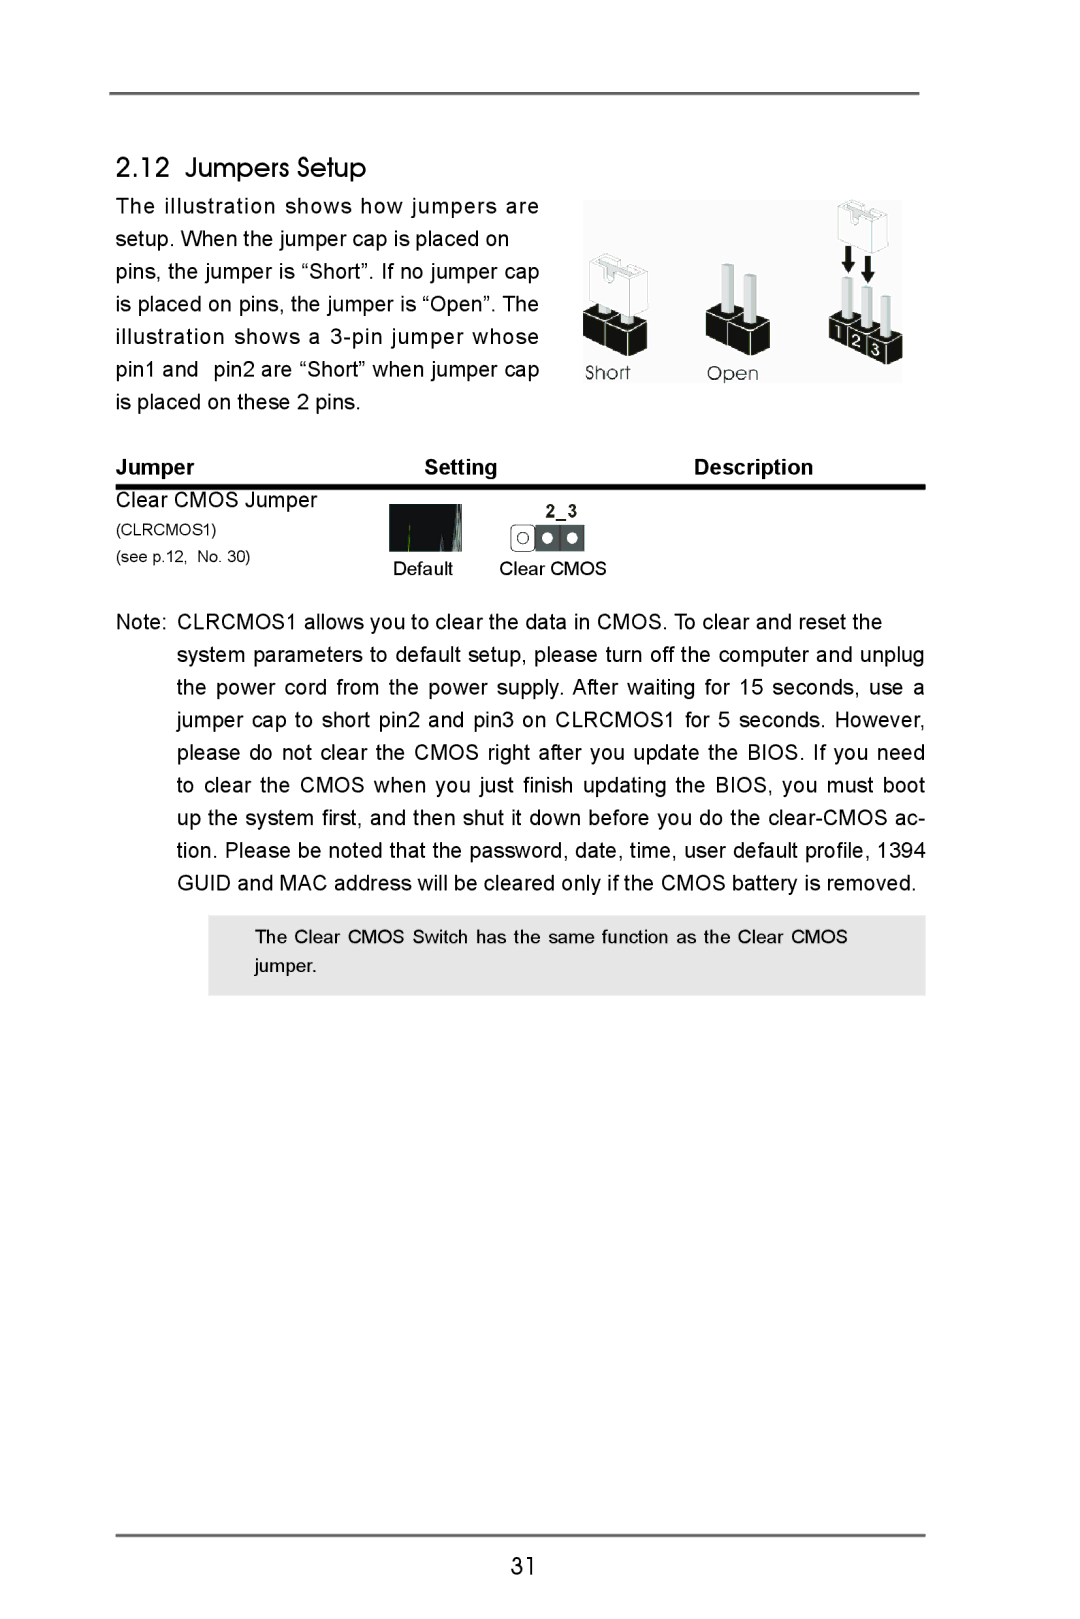 ASRock X79 Extreme4-M manual Jumpers Setup, Description, Clear Cmos Jumper 